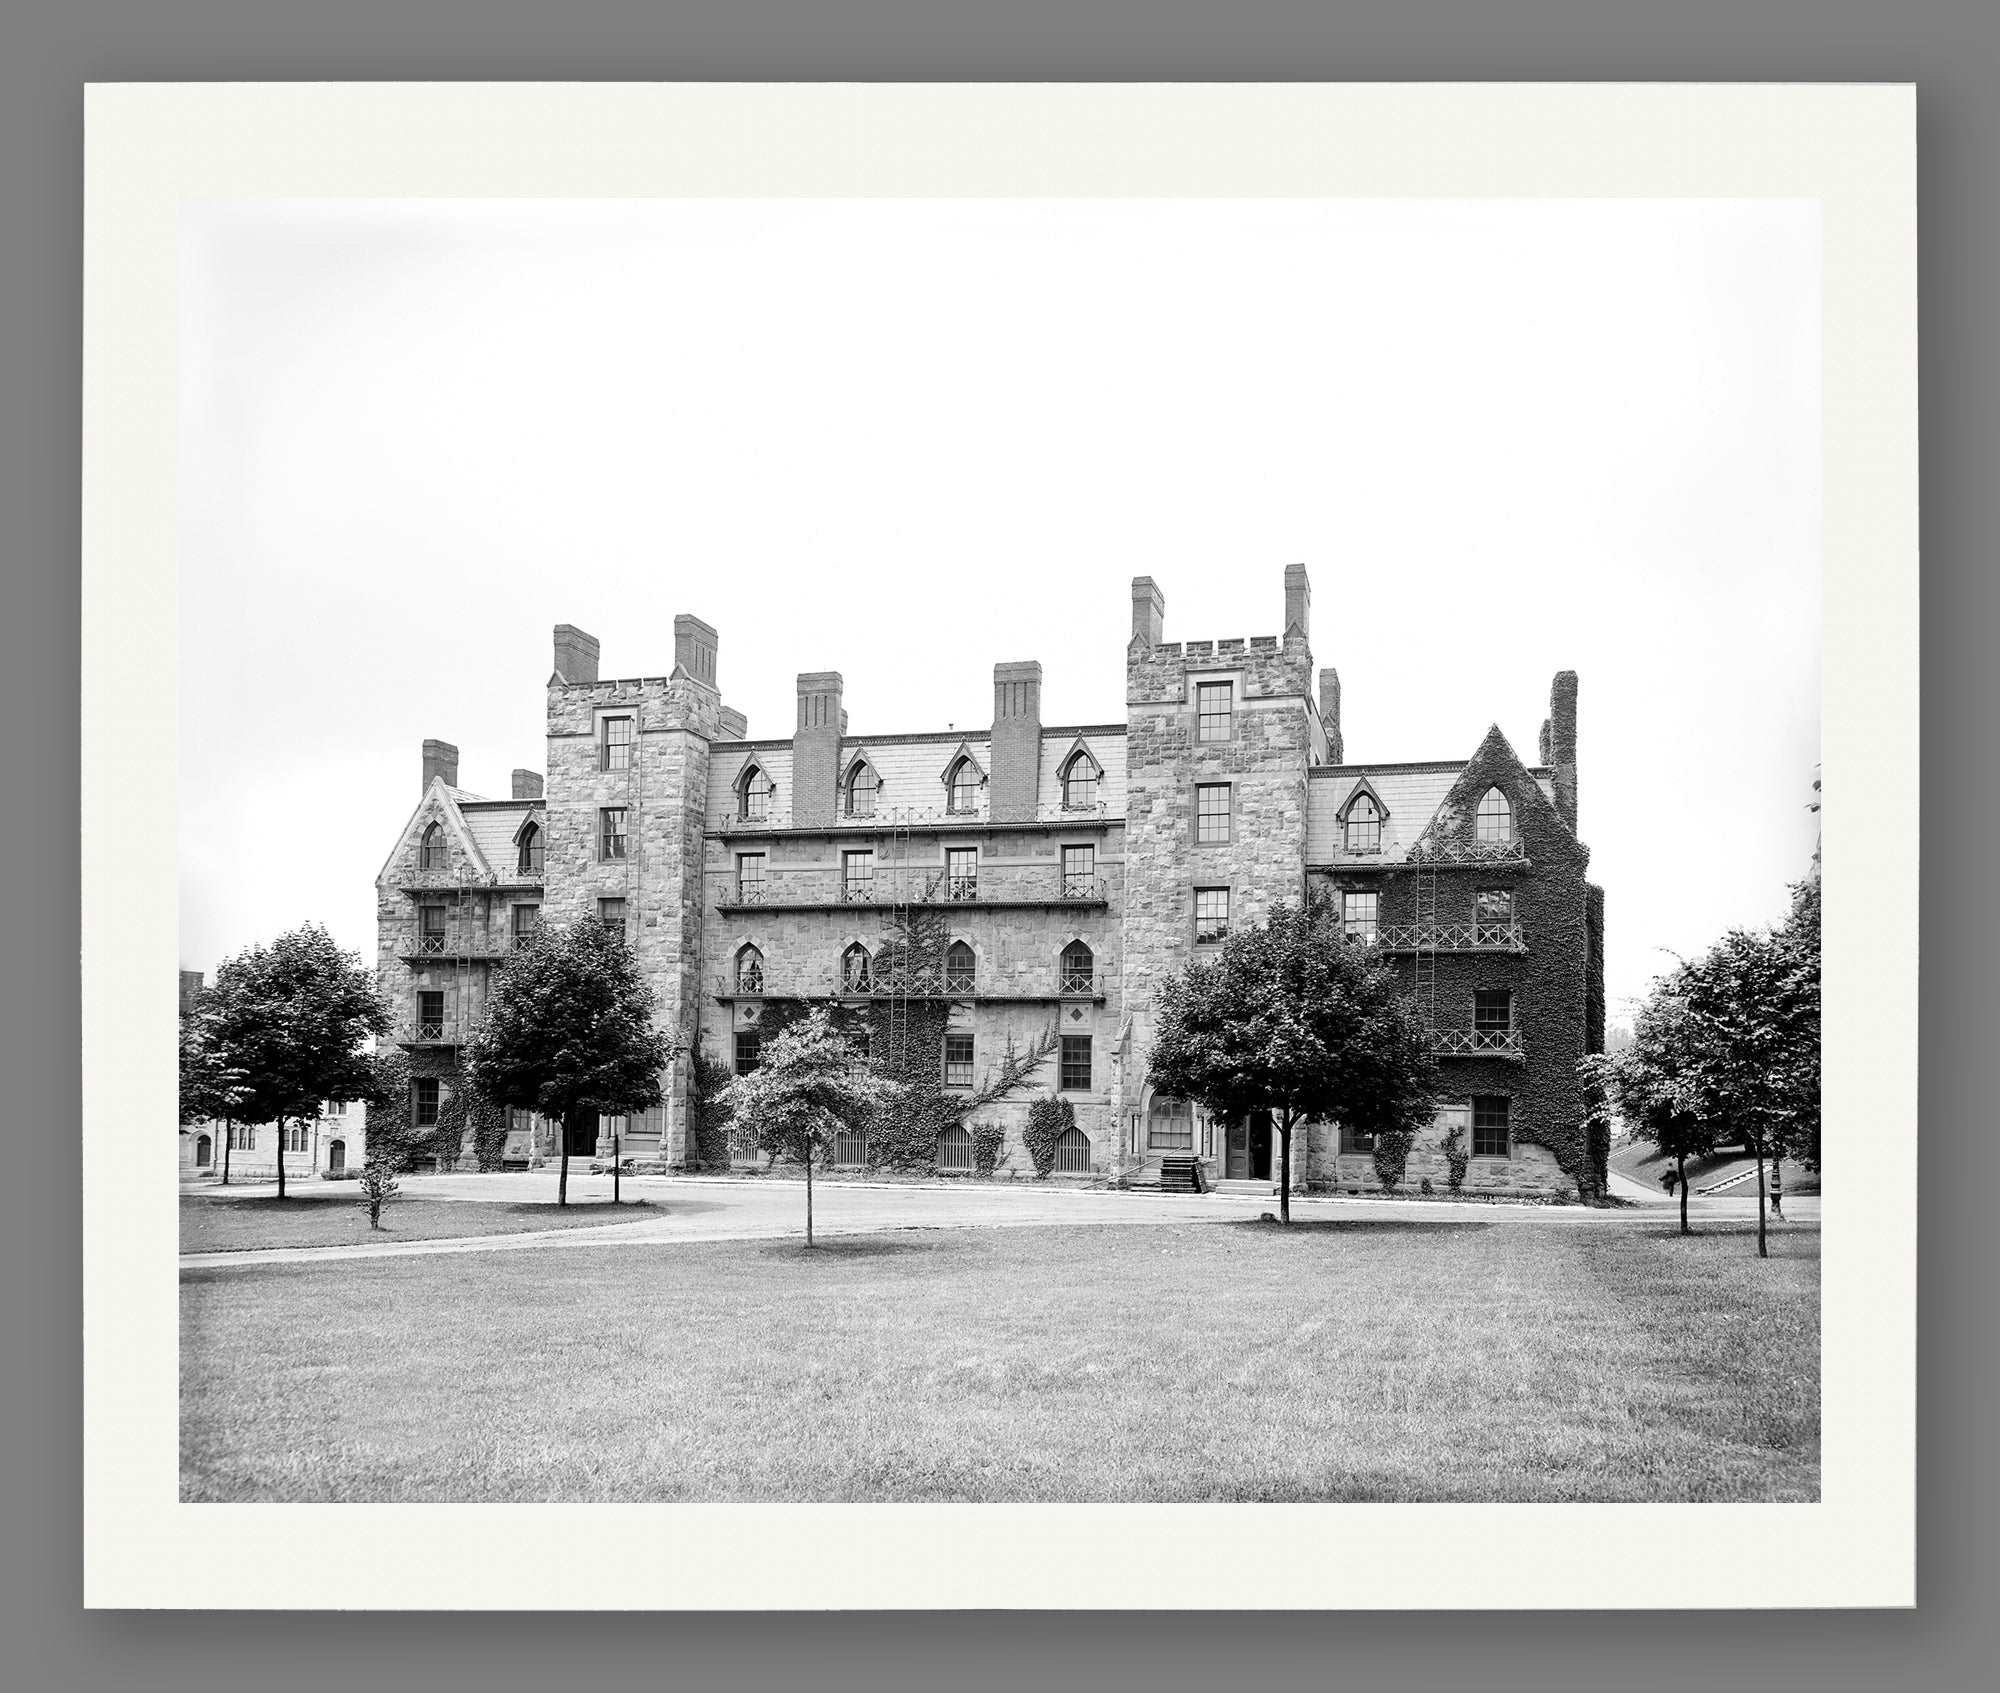 A mockup paper print of a vintage photo of Princeton University